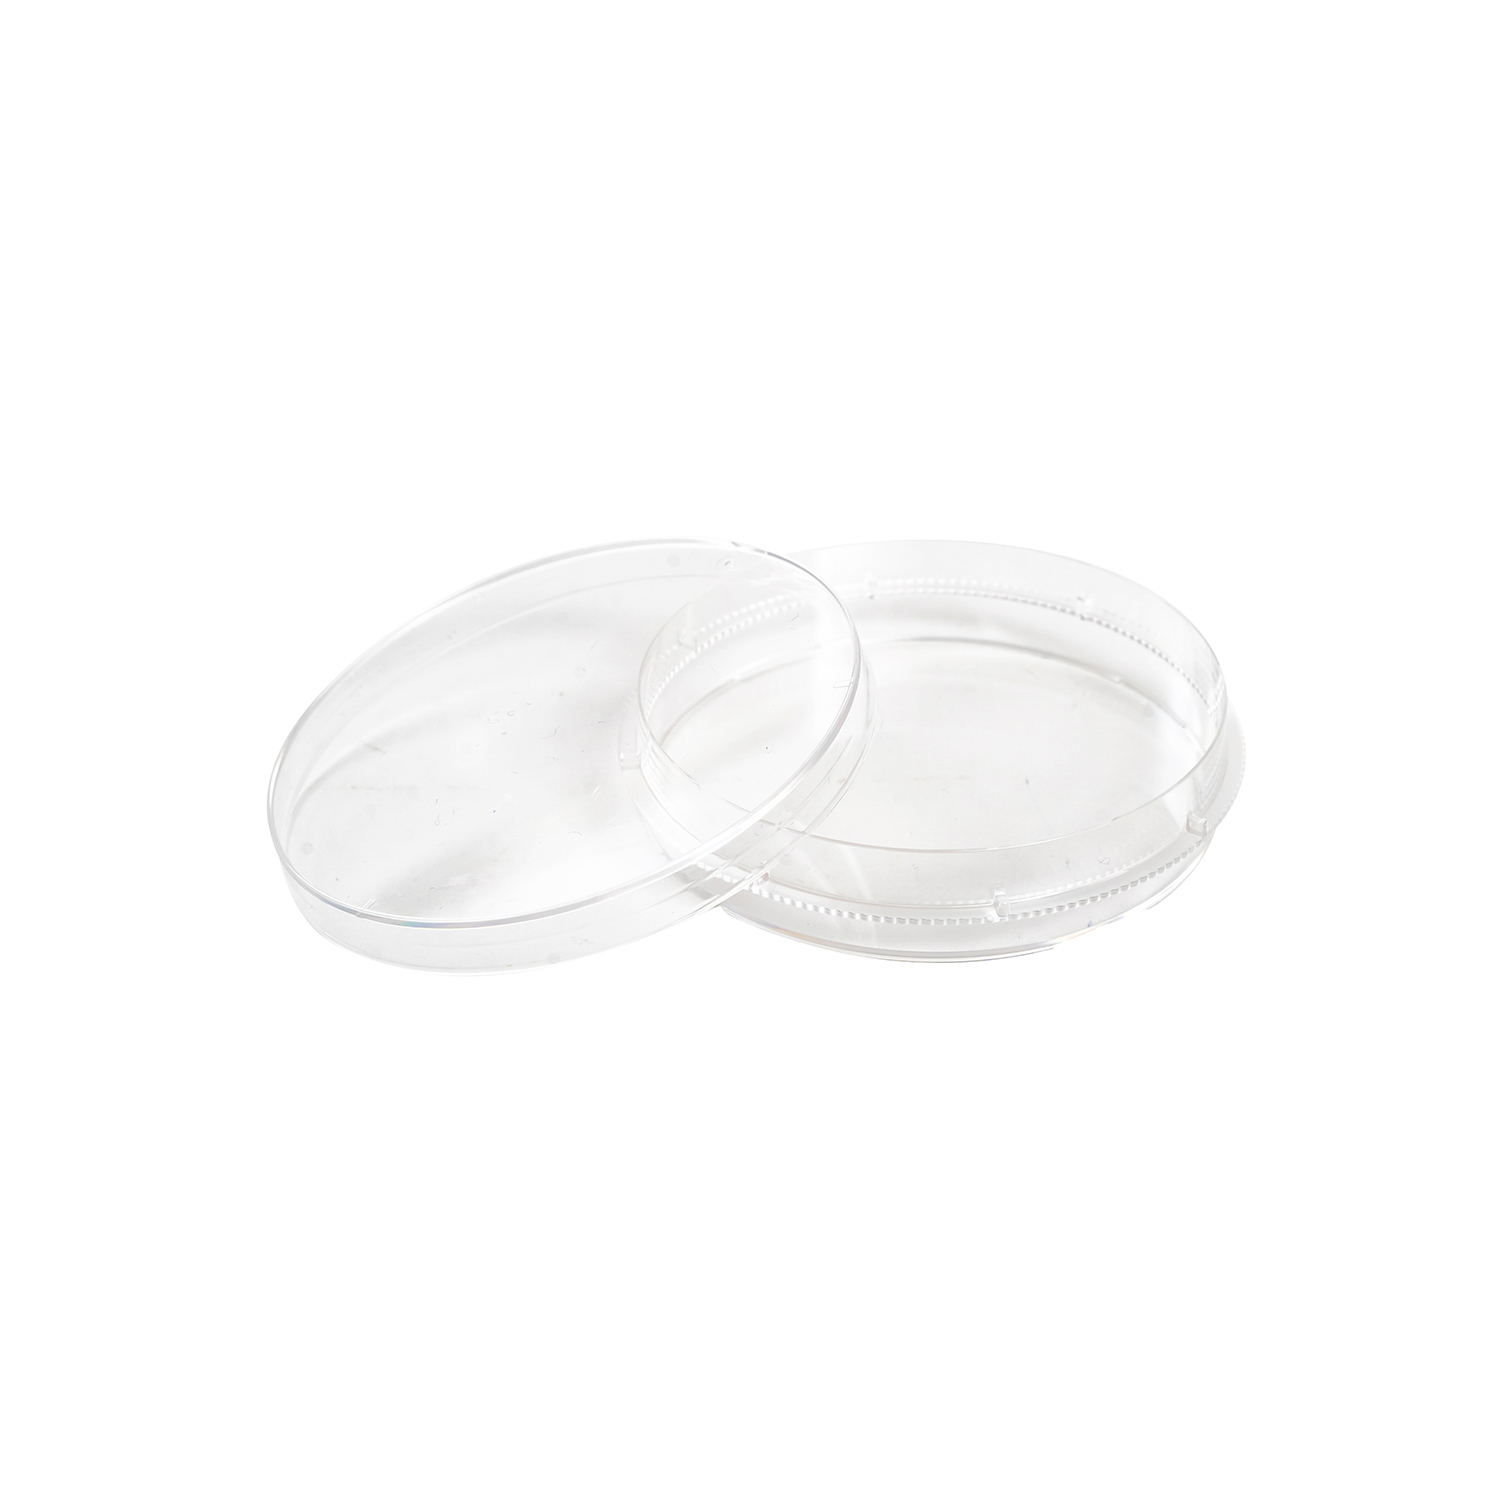 Disposable plastic petri dish